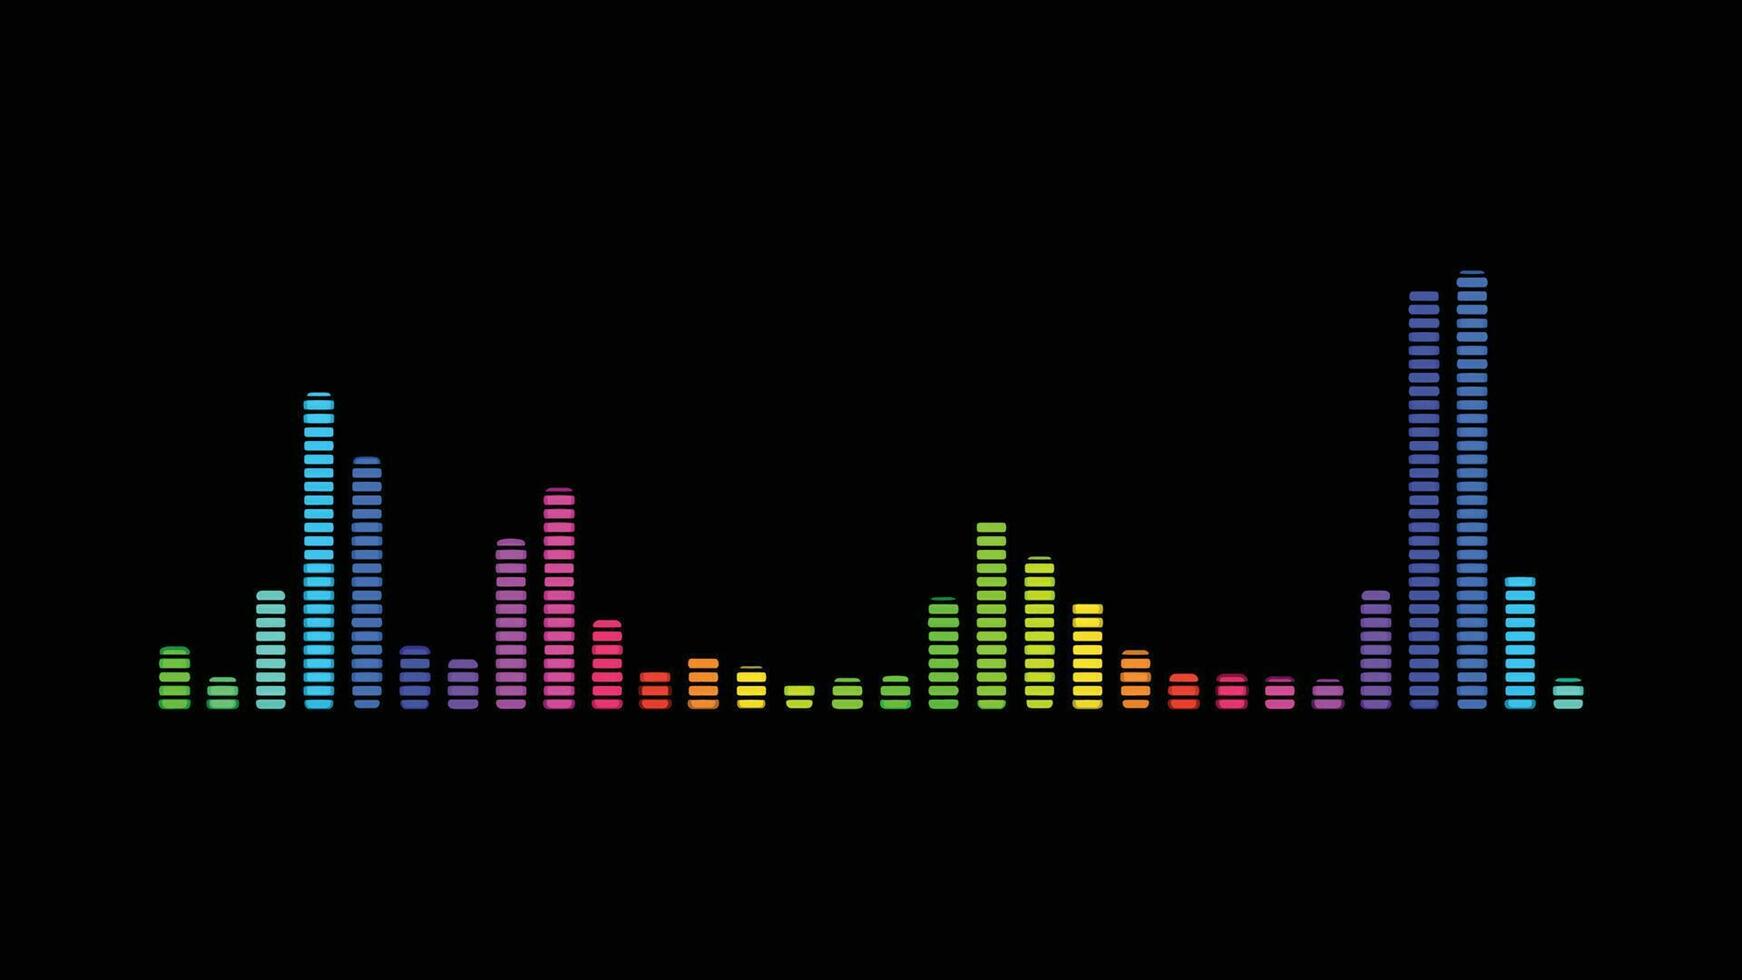 diseño de sonido música barras, multicolor digital igualada con reflexión terminado oscuro antecedentes vector